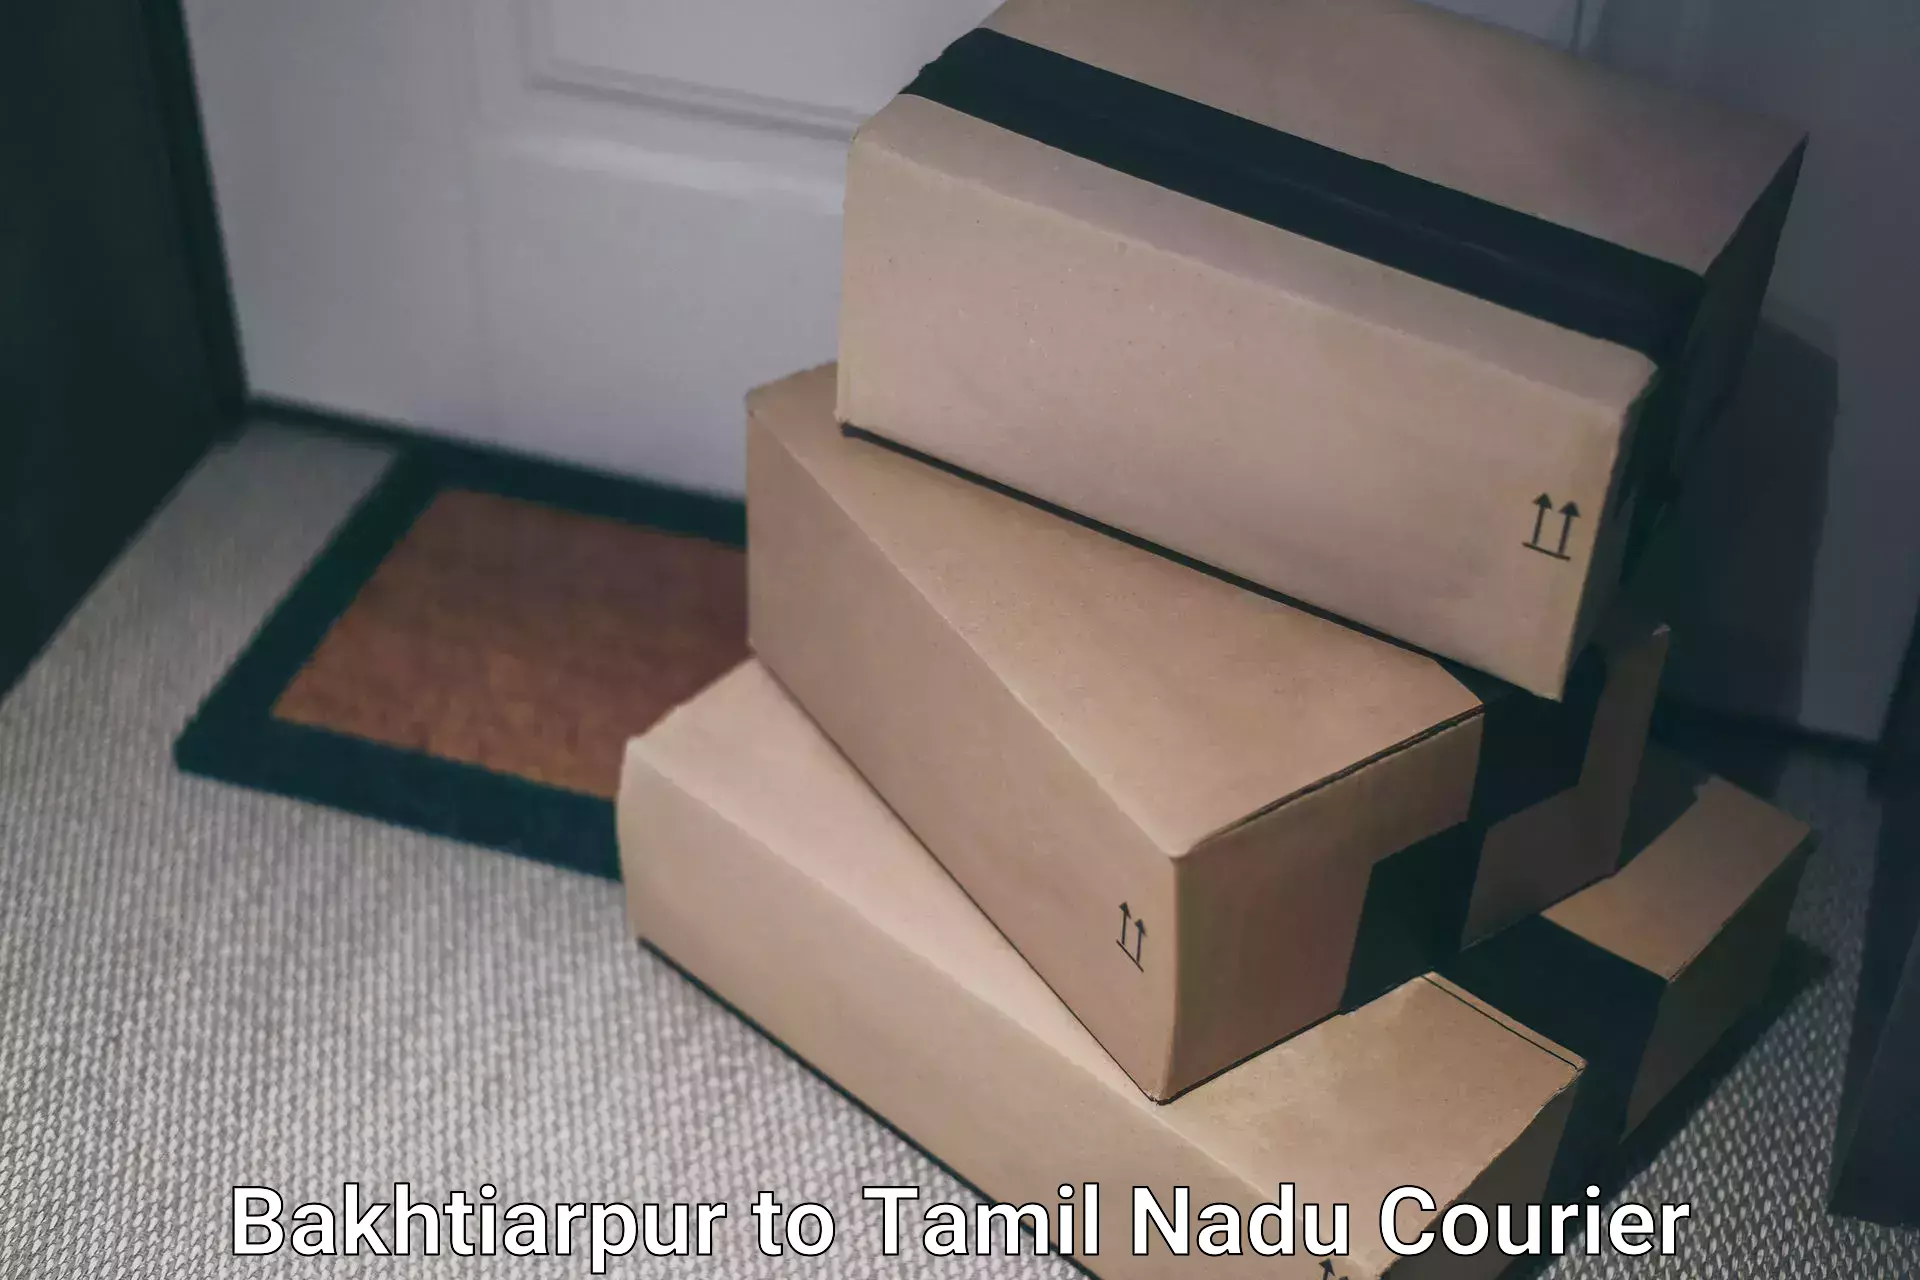 Specialized shipment handling Bakhtiarpur to Tiruchengodu